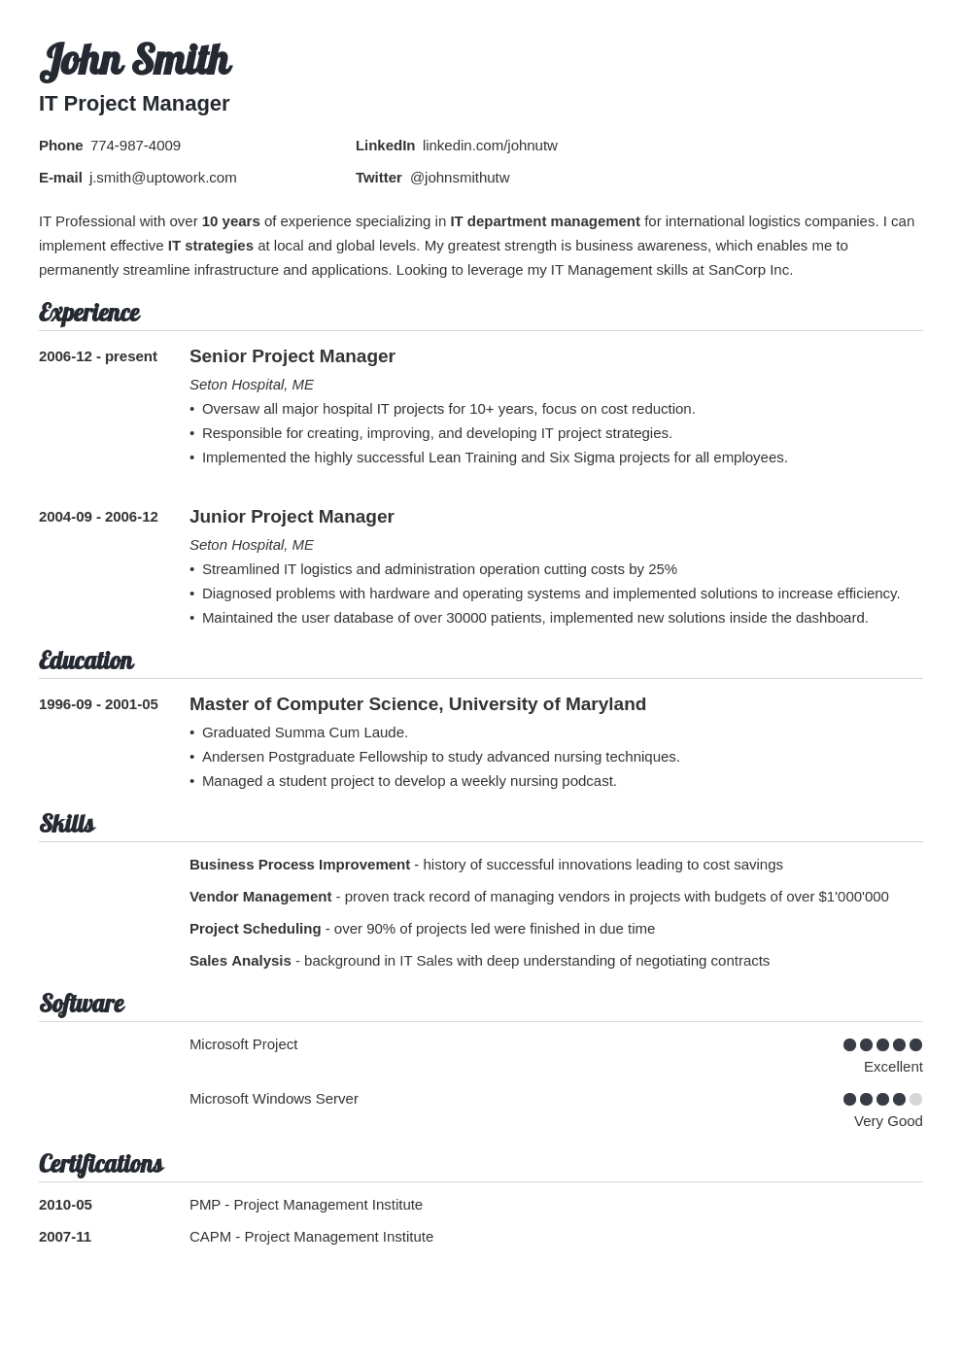 Impressive resume format